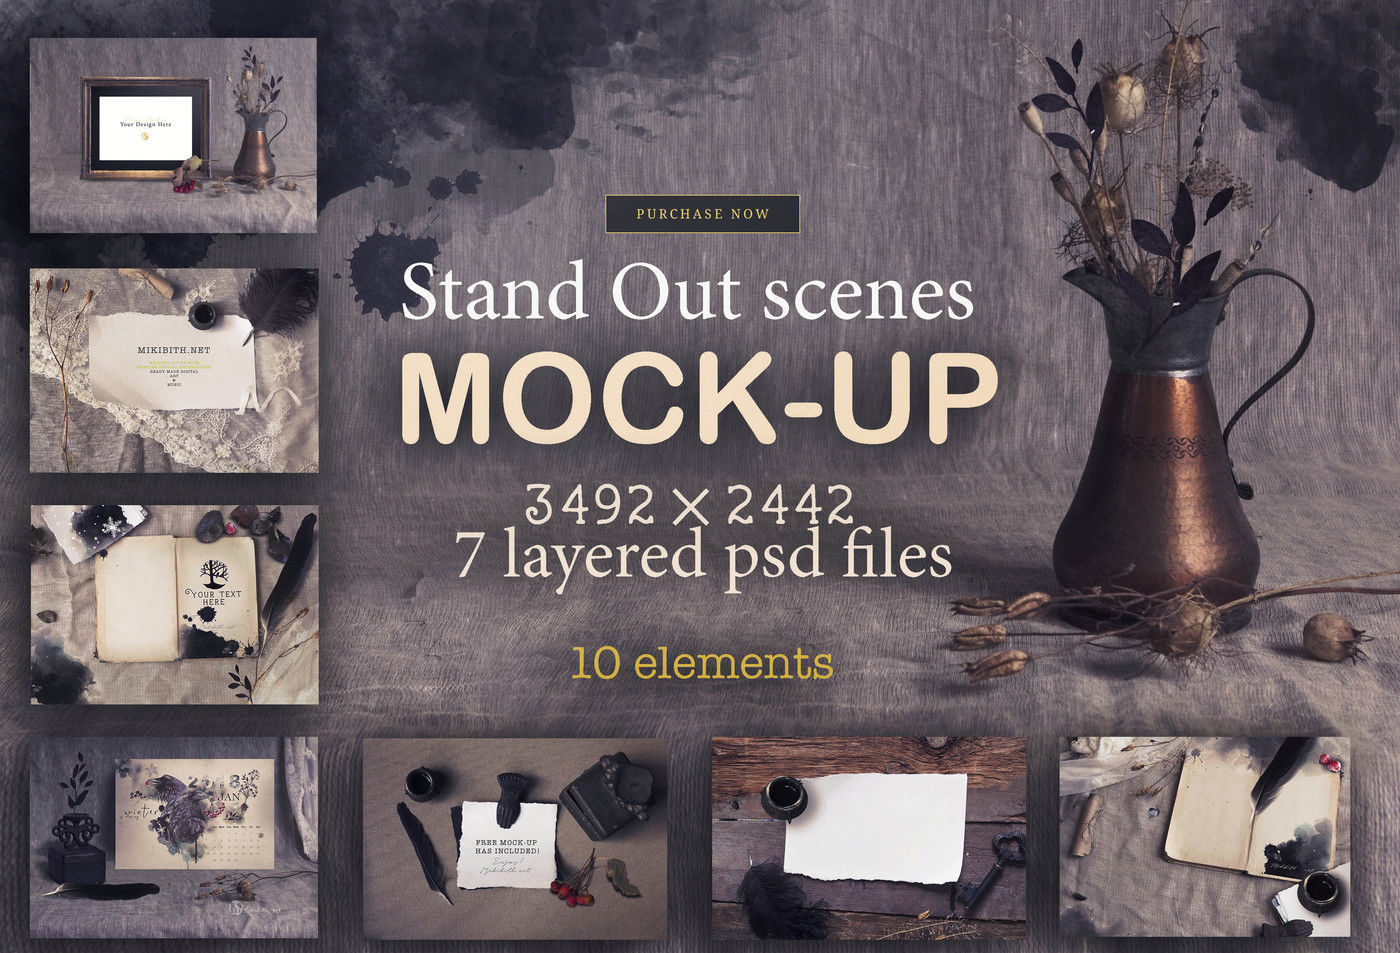 Download Patch Mockup Psd - Free Mockups | PSD Template | Design Assets